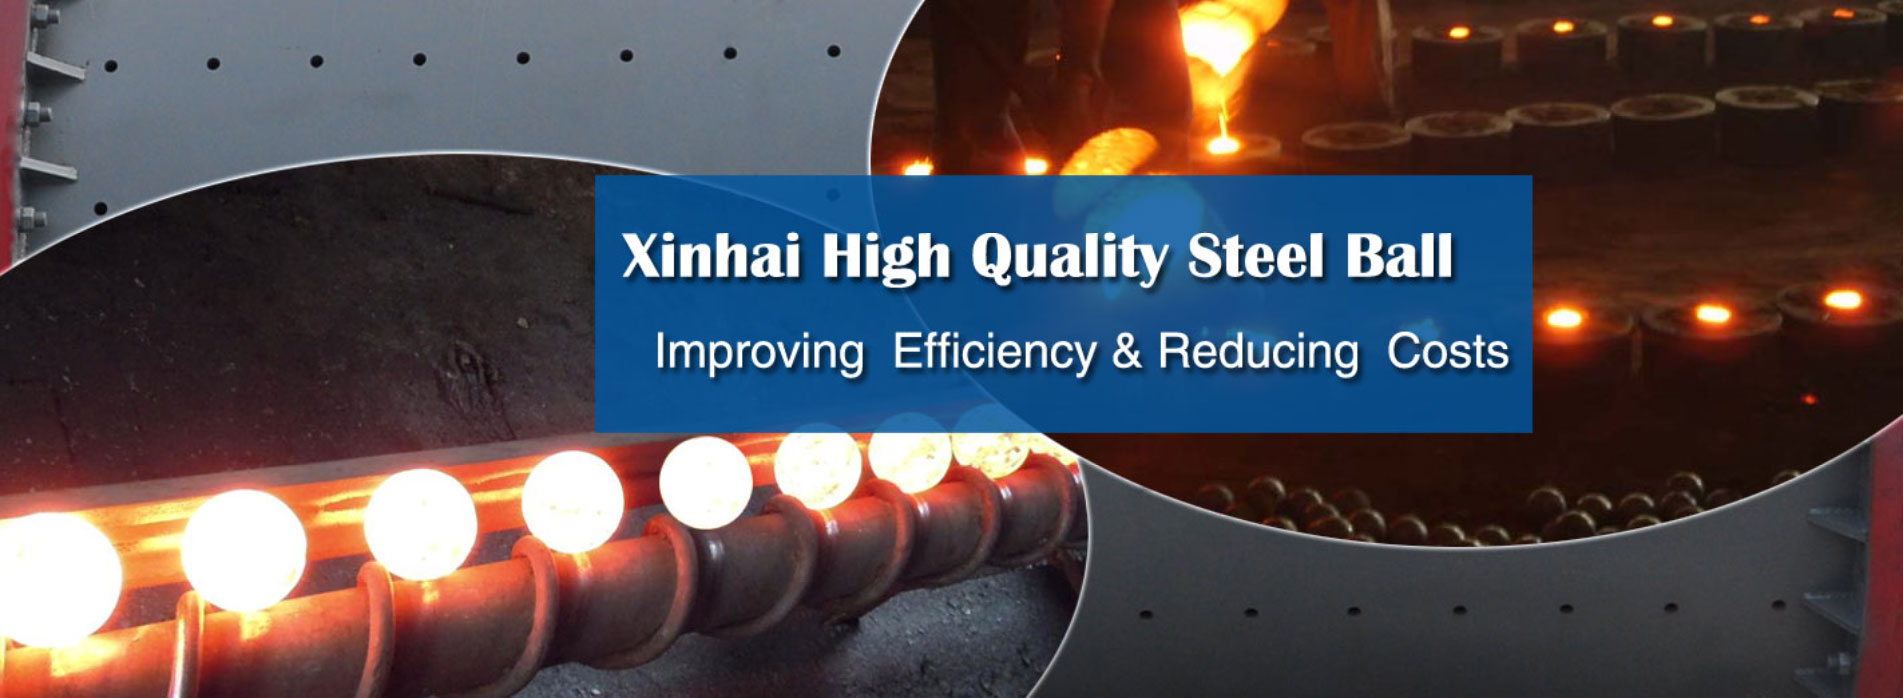 Xinhai High Quality Steel Ball